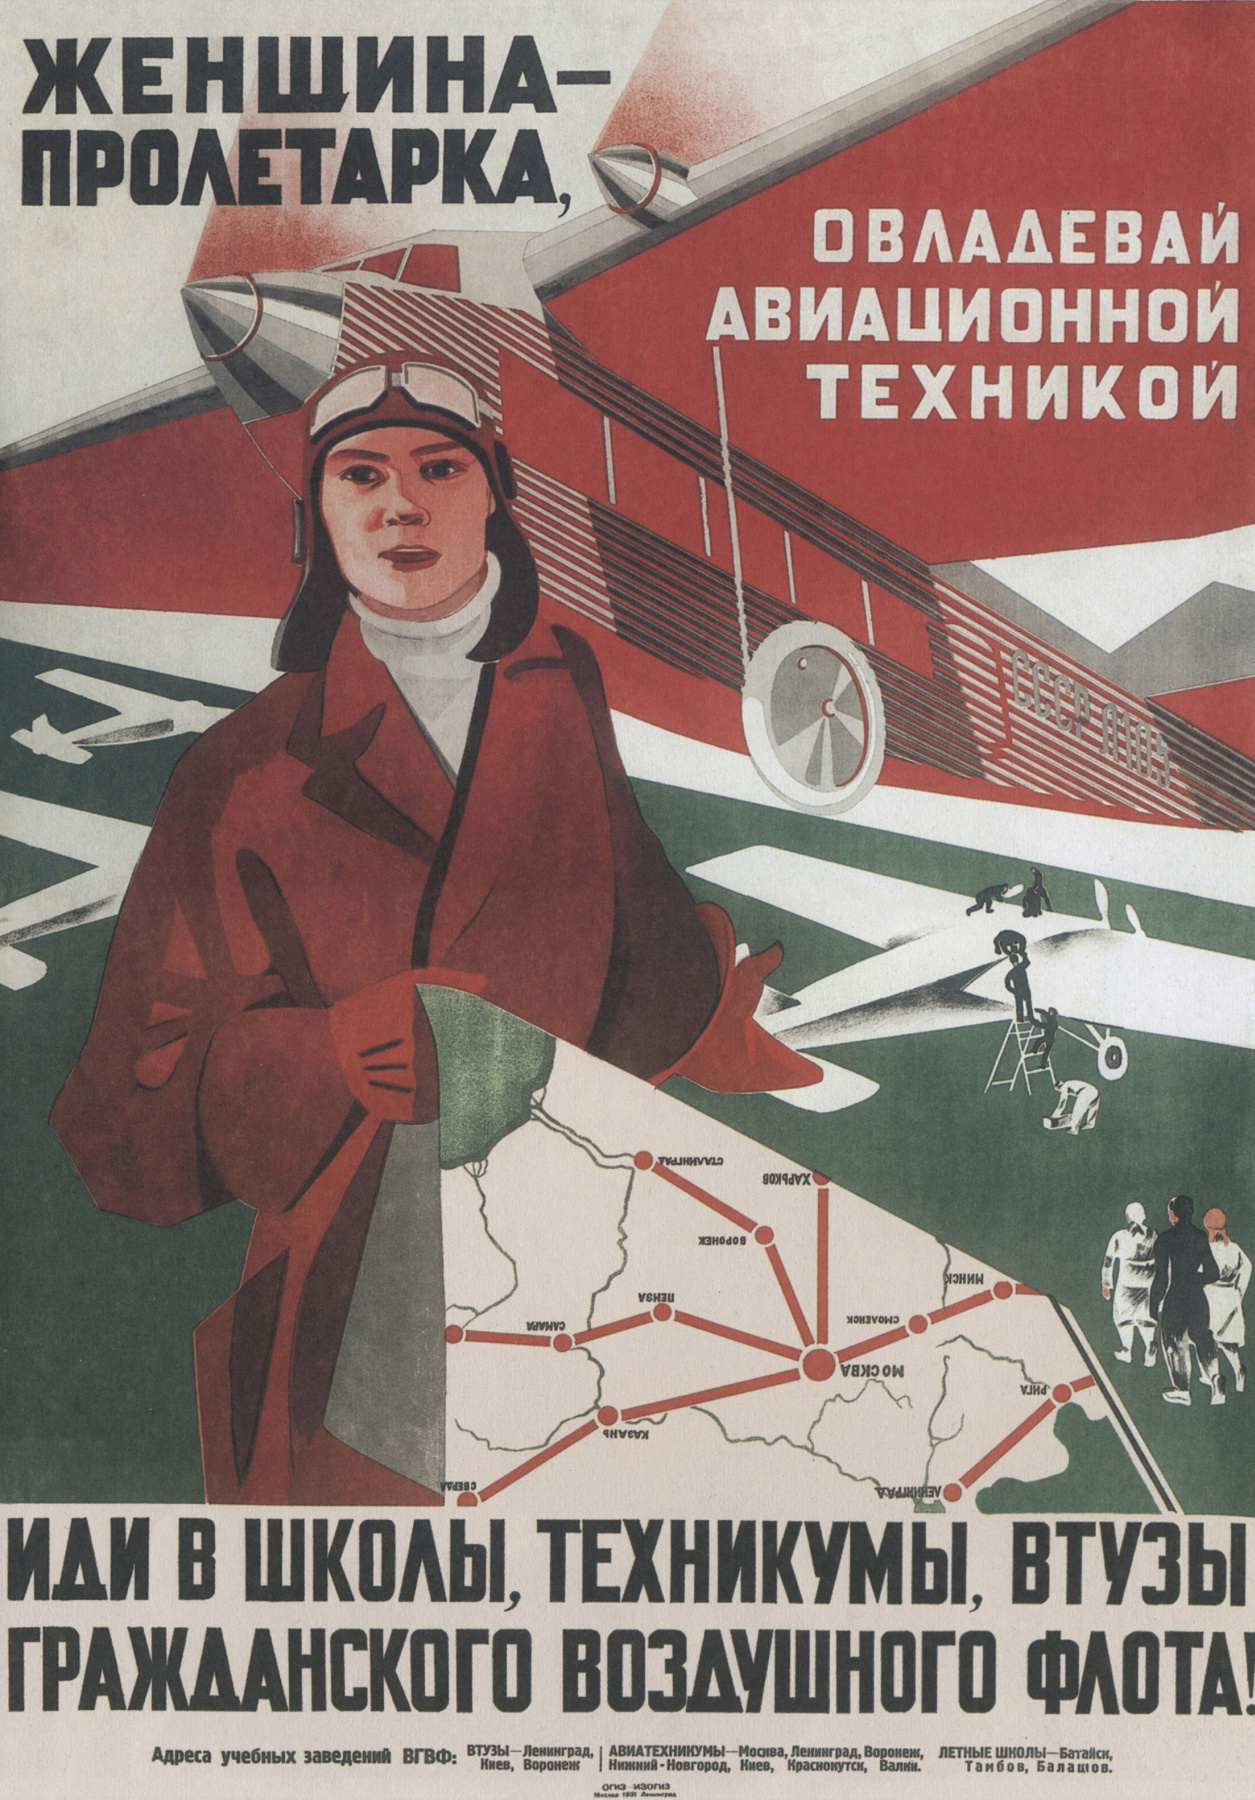 Maria Feliksovna Bree Bain. Woman-proletarka, acquire aircraft